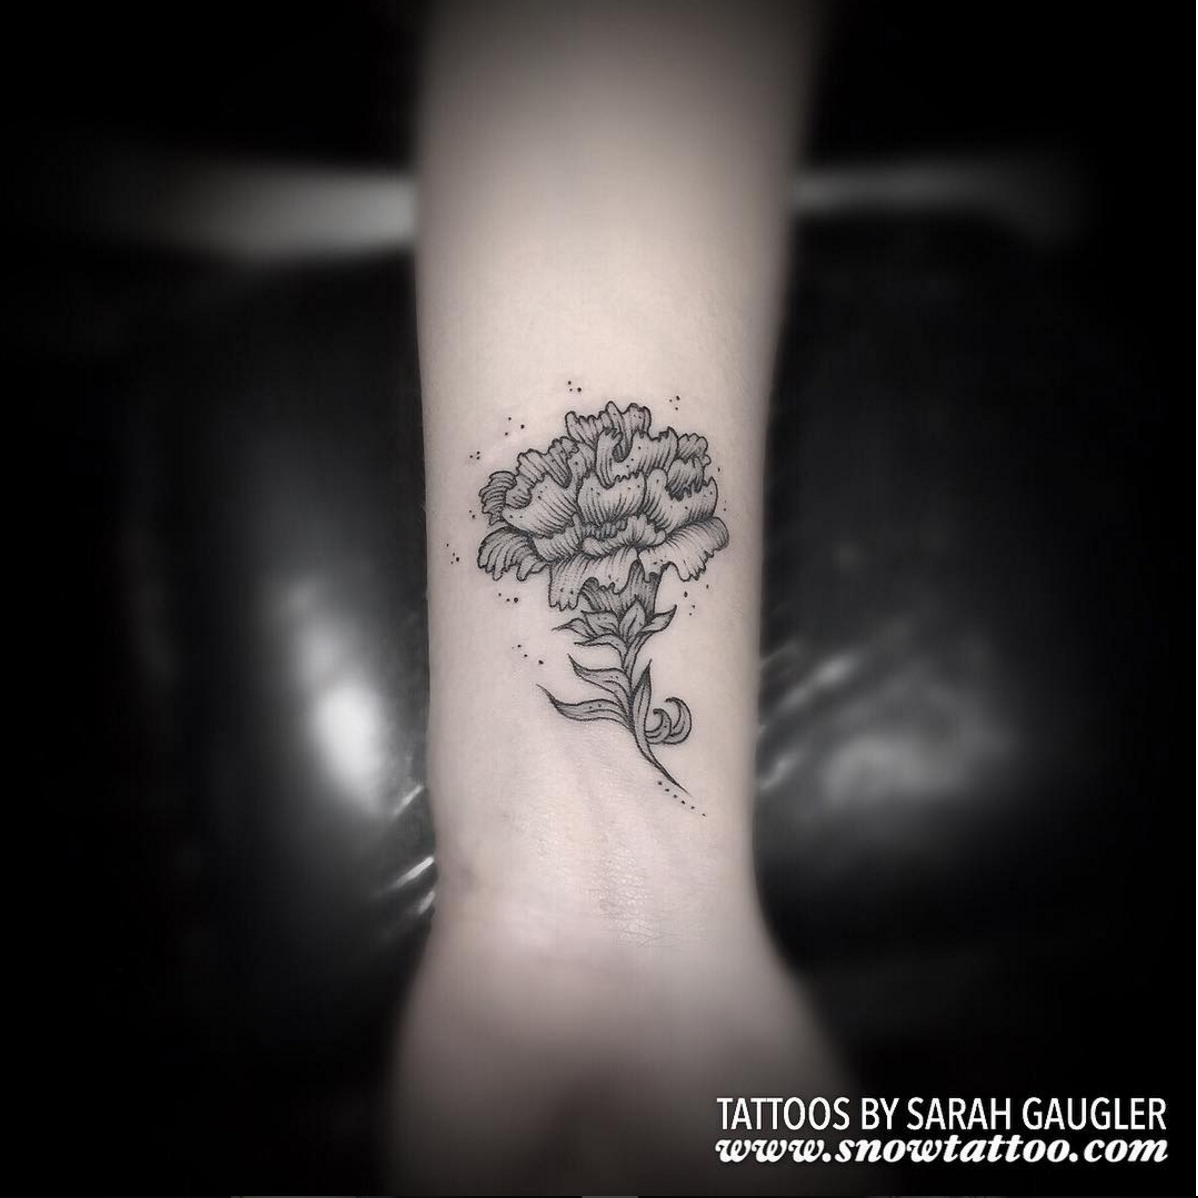 Sarah Gaugler Snow Tattoo Custom Floral Carnation New York Best Tattoos Best Tattoo Artist NYC.png